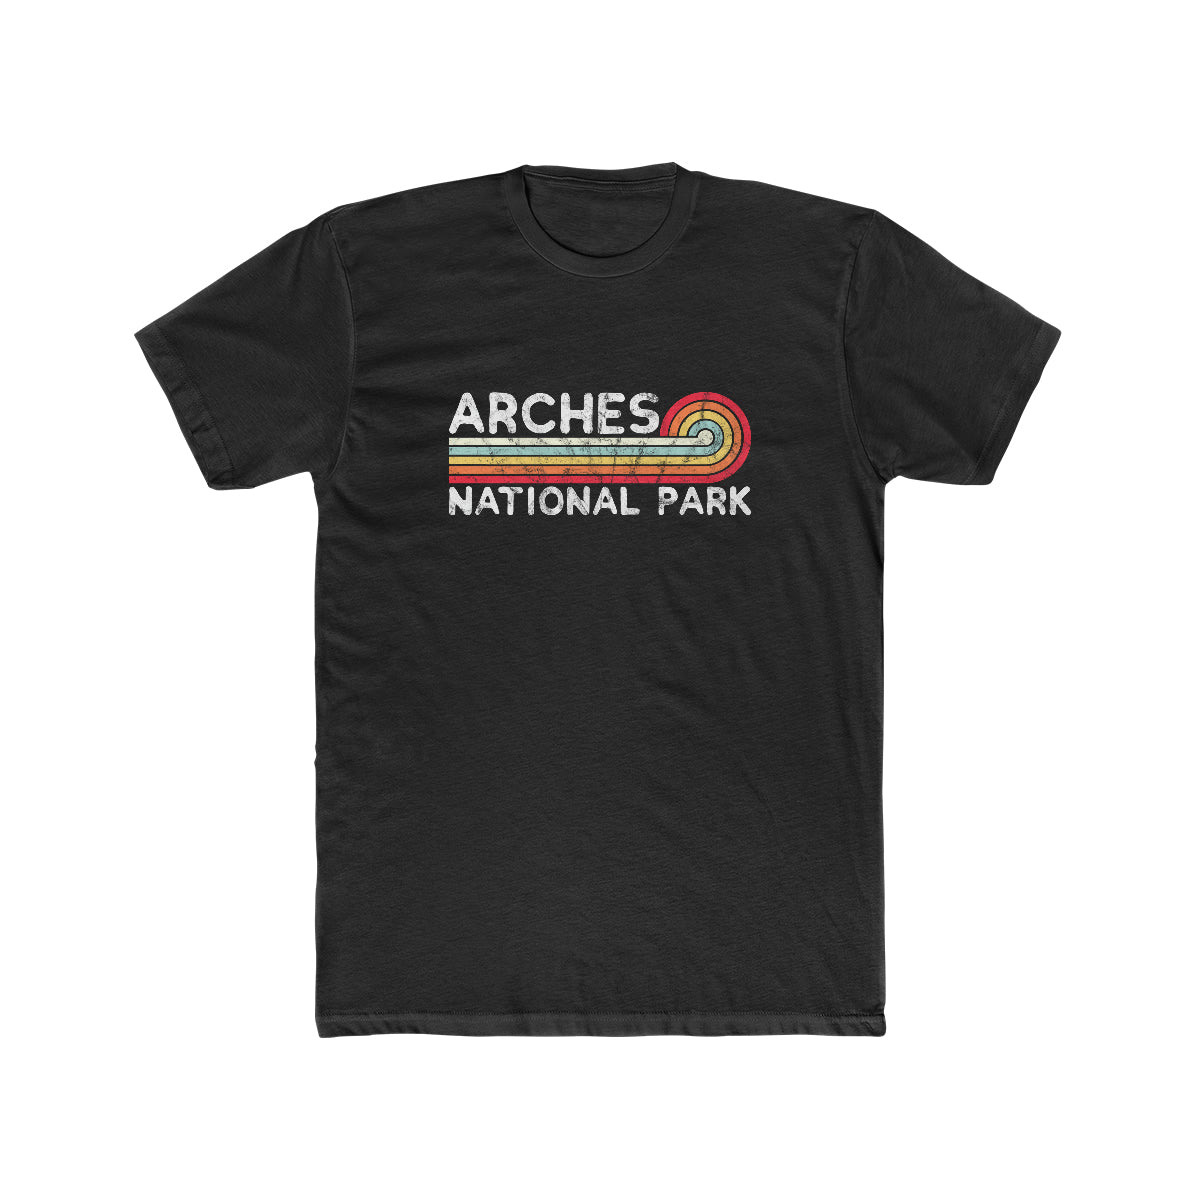 Arches National Park T-Shirt - Vintage Stretched Sunrise